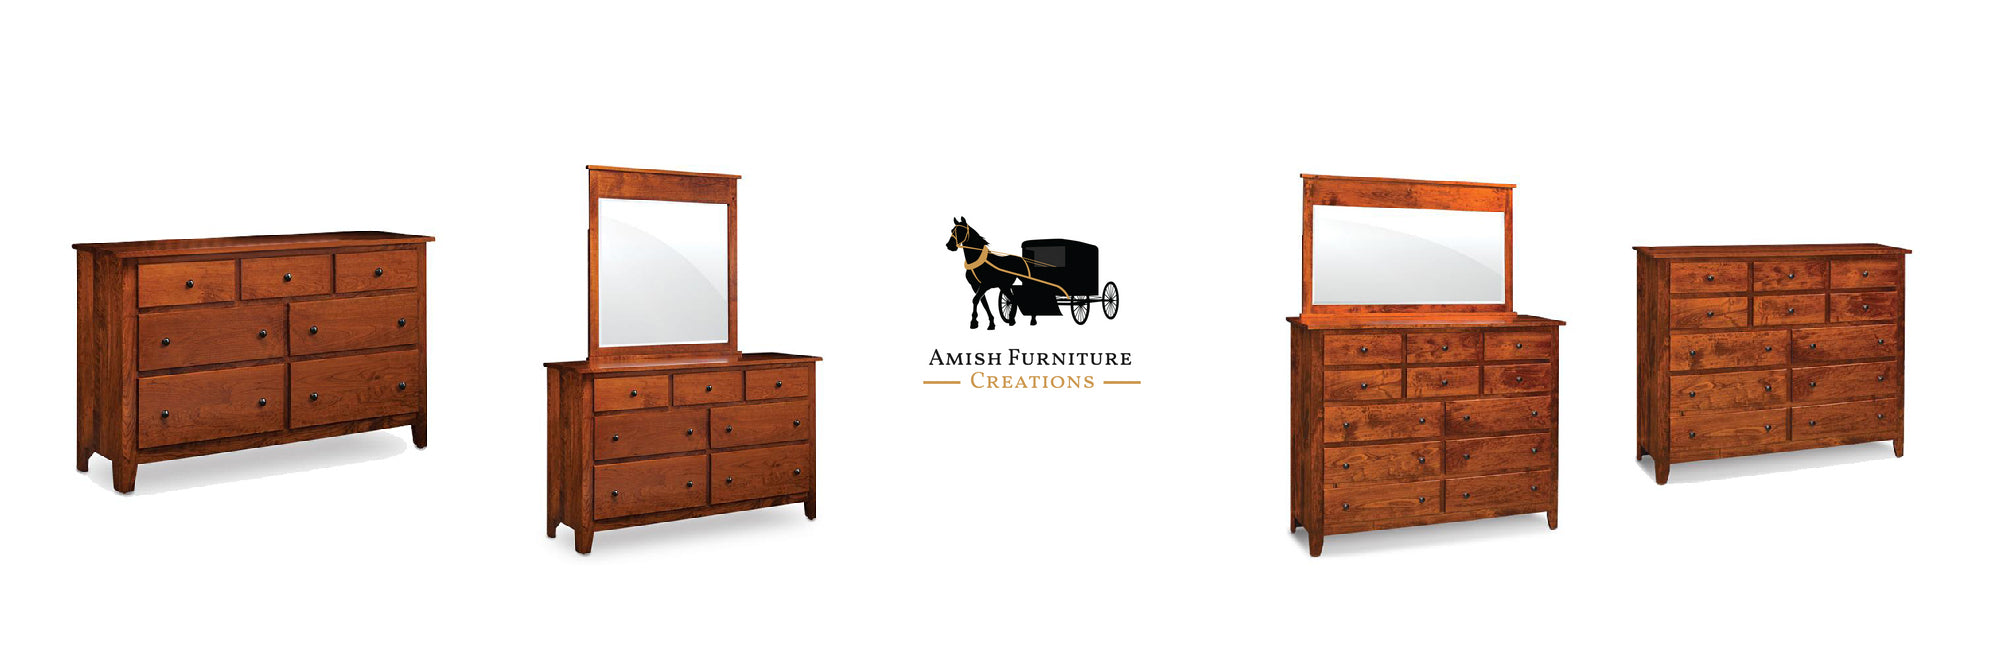 amish furniture dresser creations